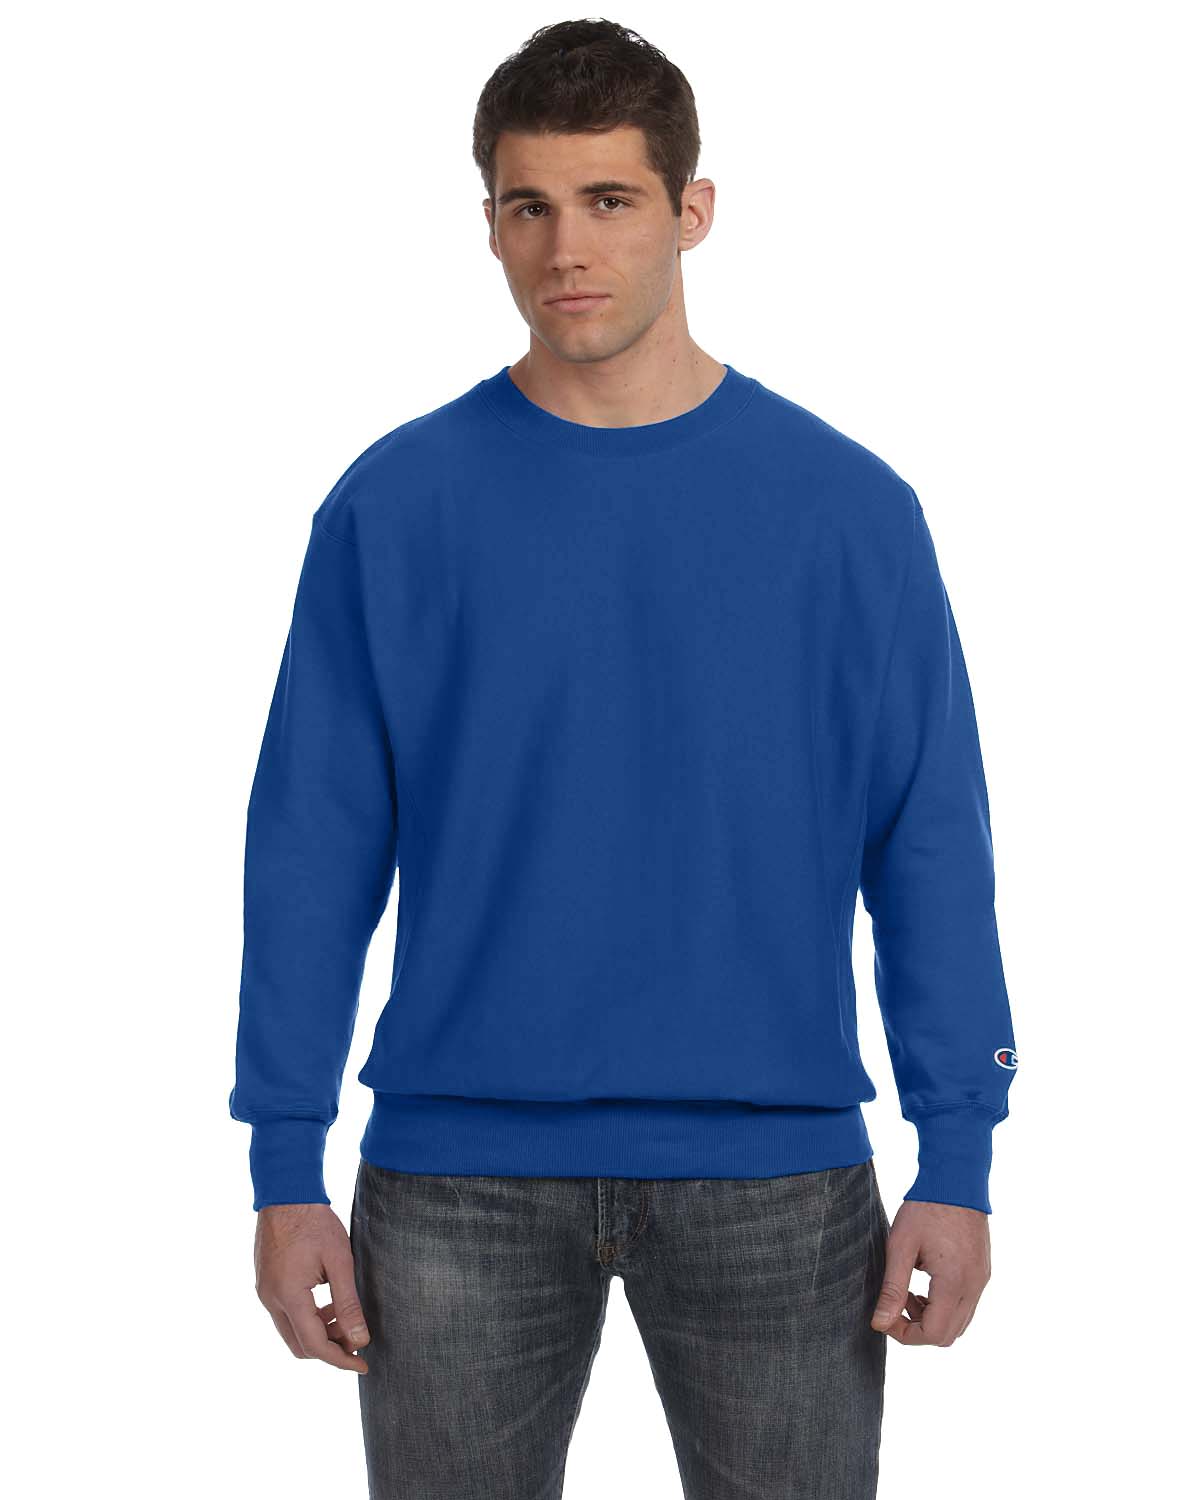 Champion S149 12 oz. Reverse-Weave Fleece Crew $37.19 - Sweatshirts